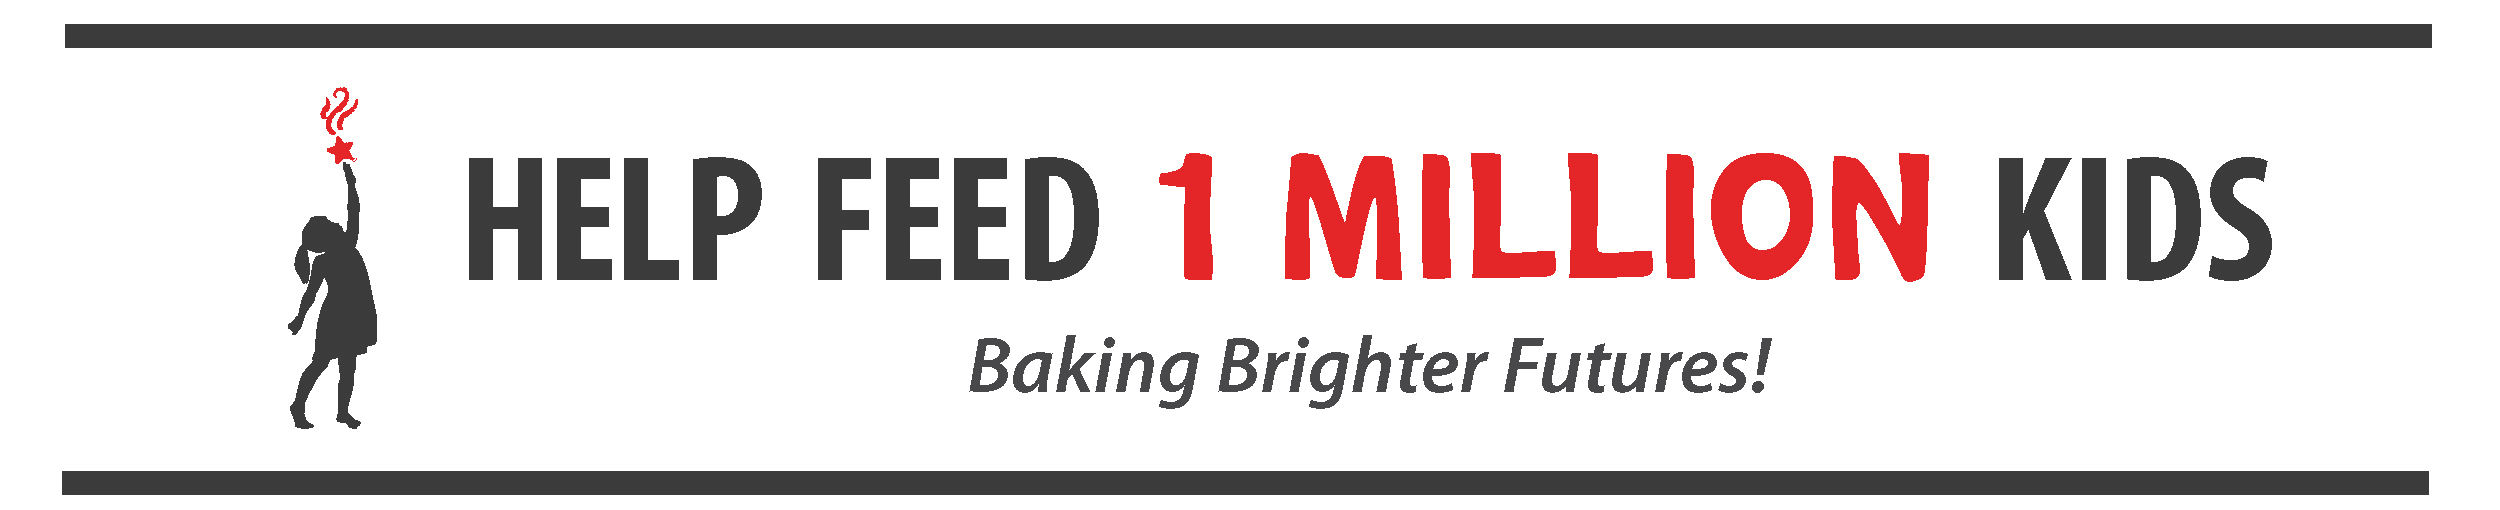 Help Feed 1 Million Kids - Baking Brighter Futures